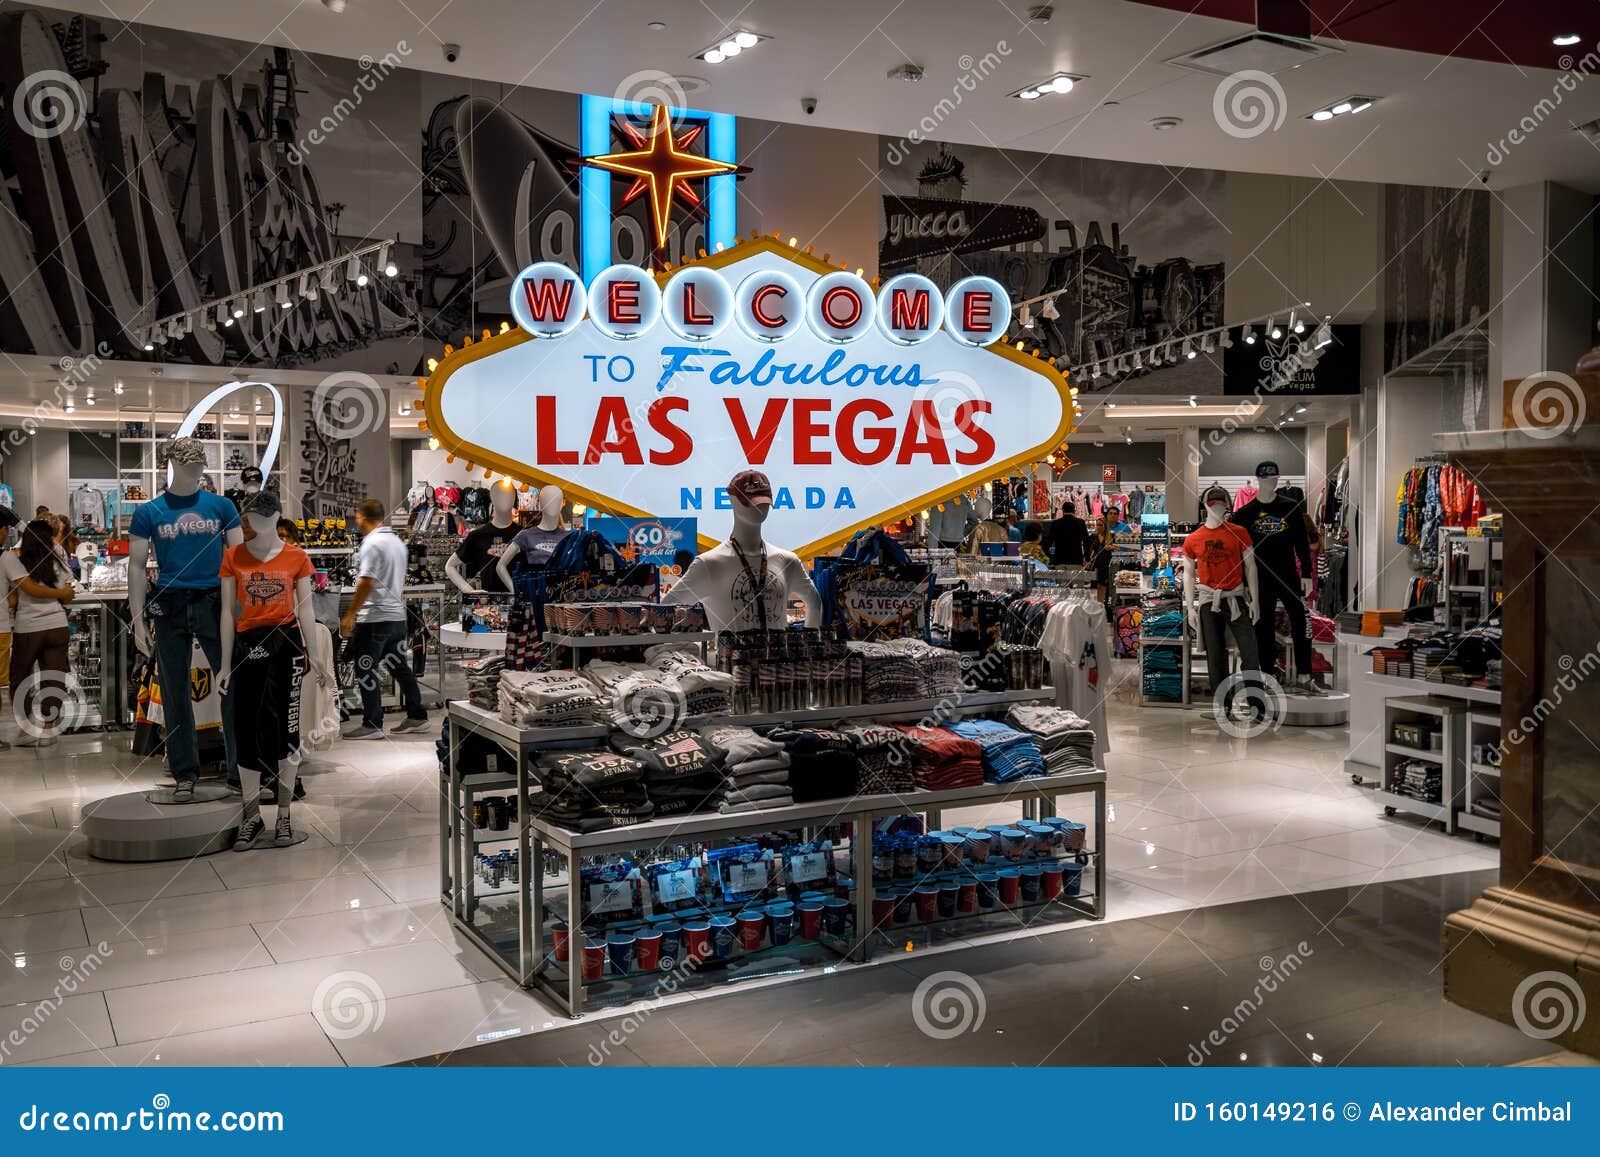 Las Vegas, Nevada, USA - Souvenirs Shop with Welcome To Las Vegas Sign